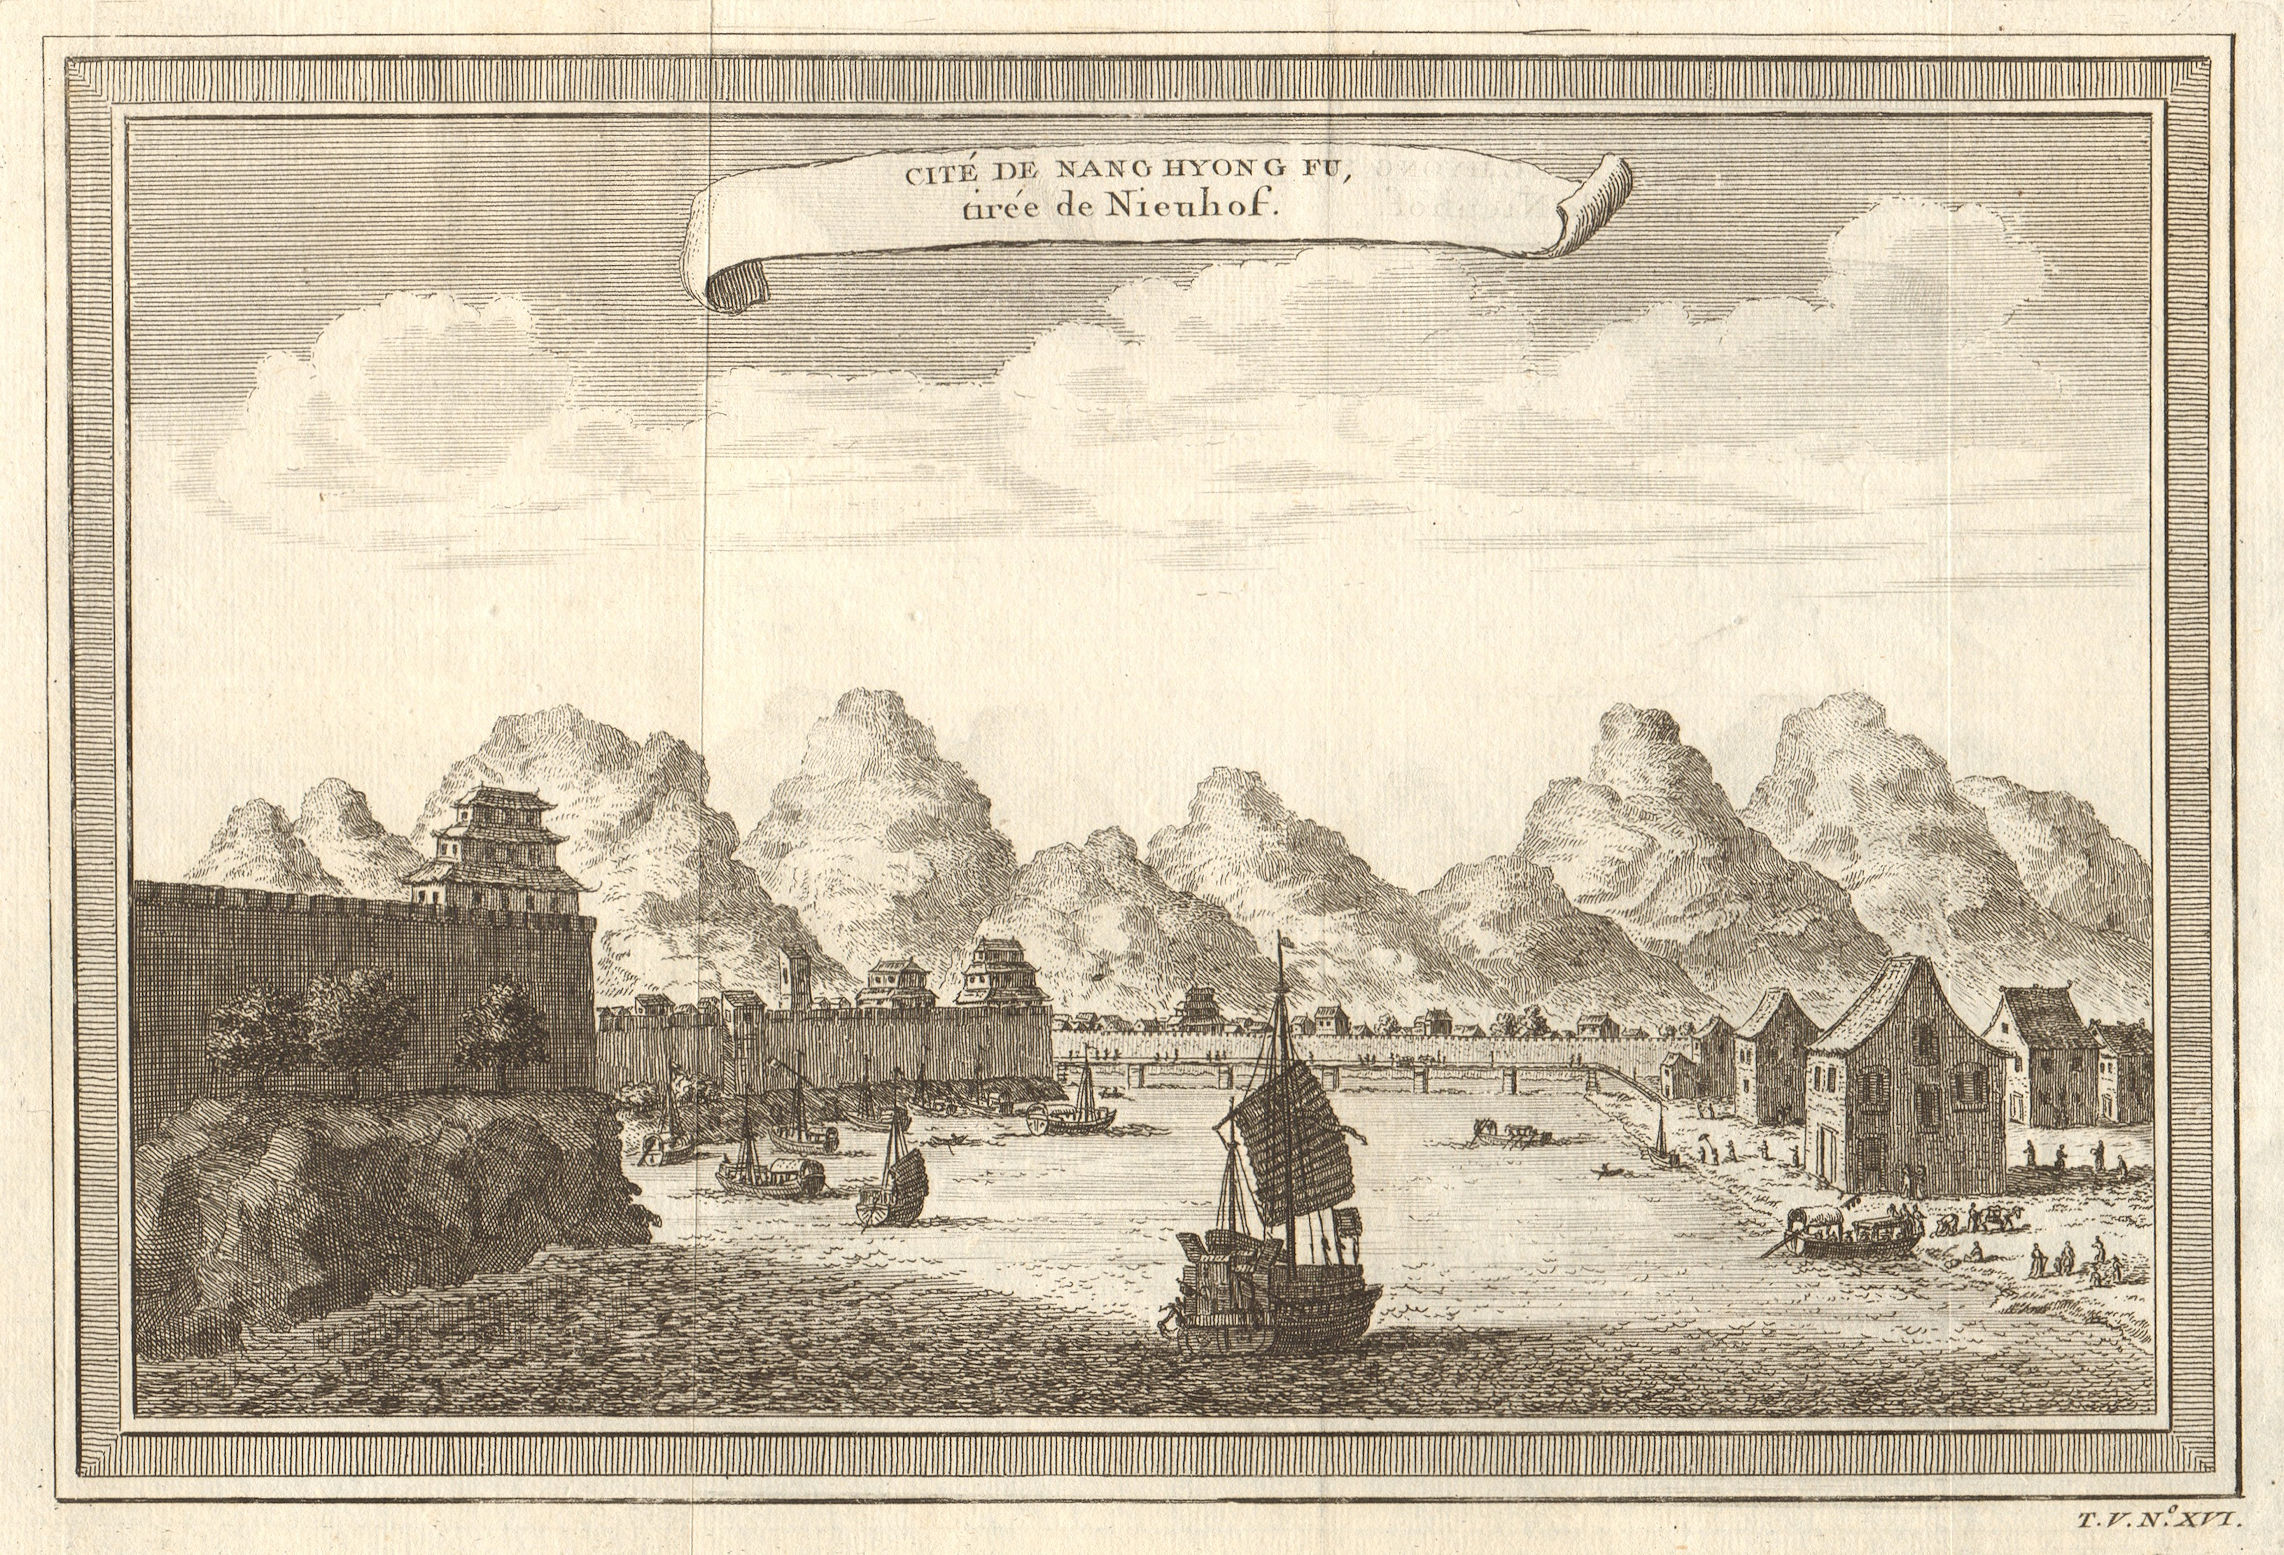 Associate Product 'Cité de Nang Hyong Fu'. View of the city of Nanxiong, China, from Nieuhof 1748